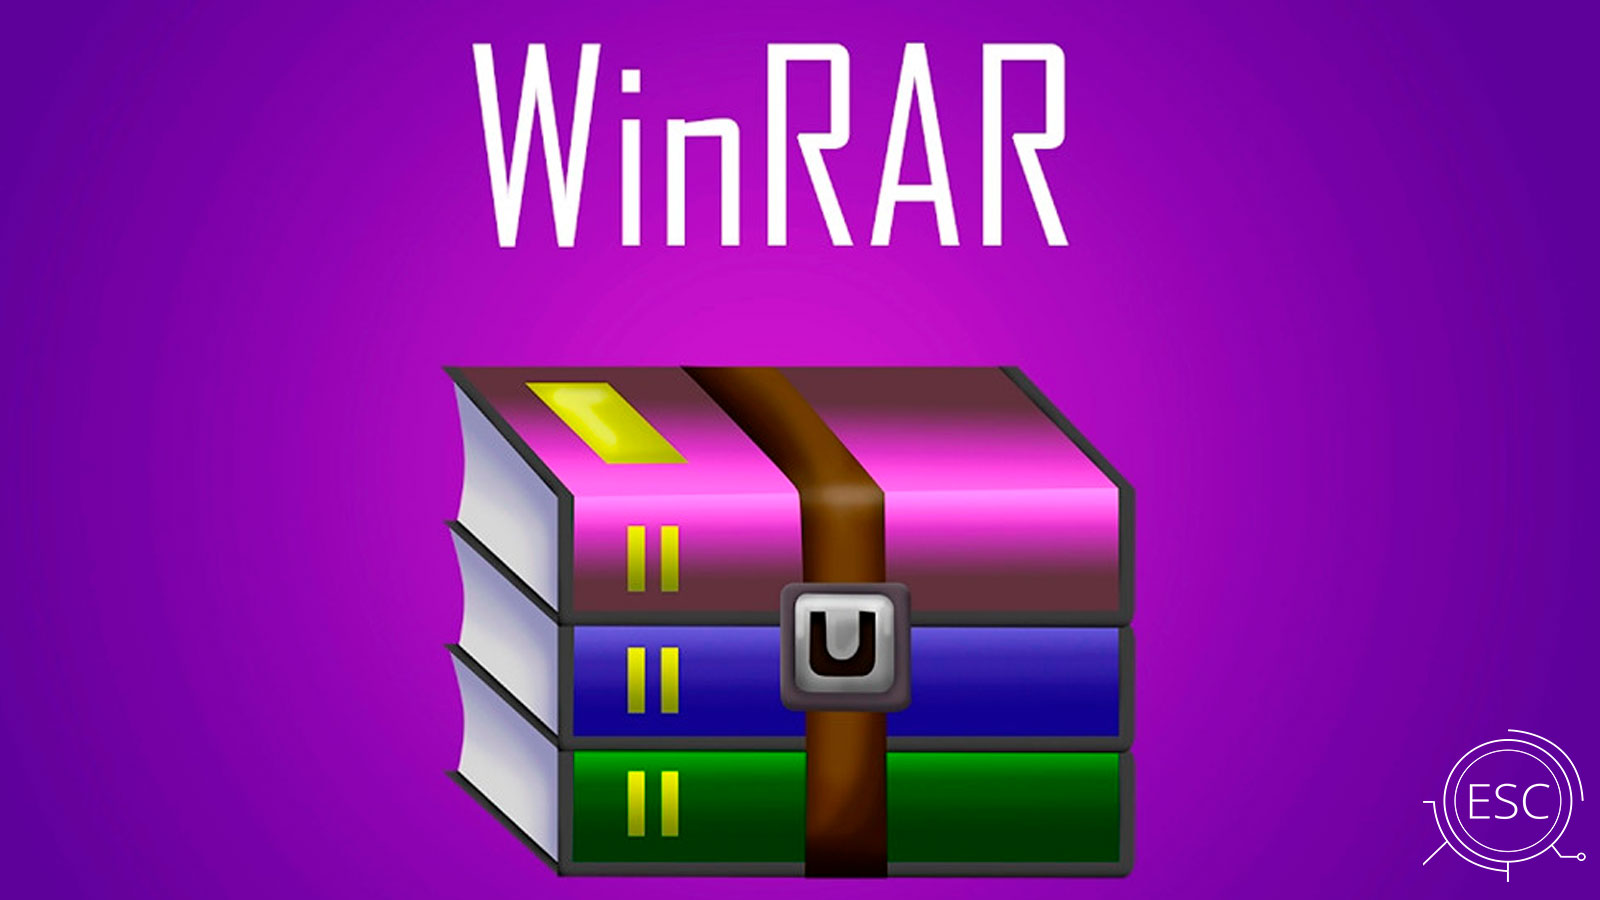 winrar version 5.70 download